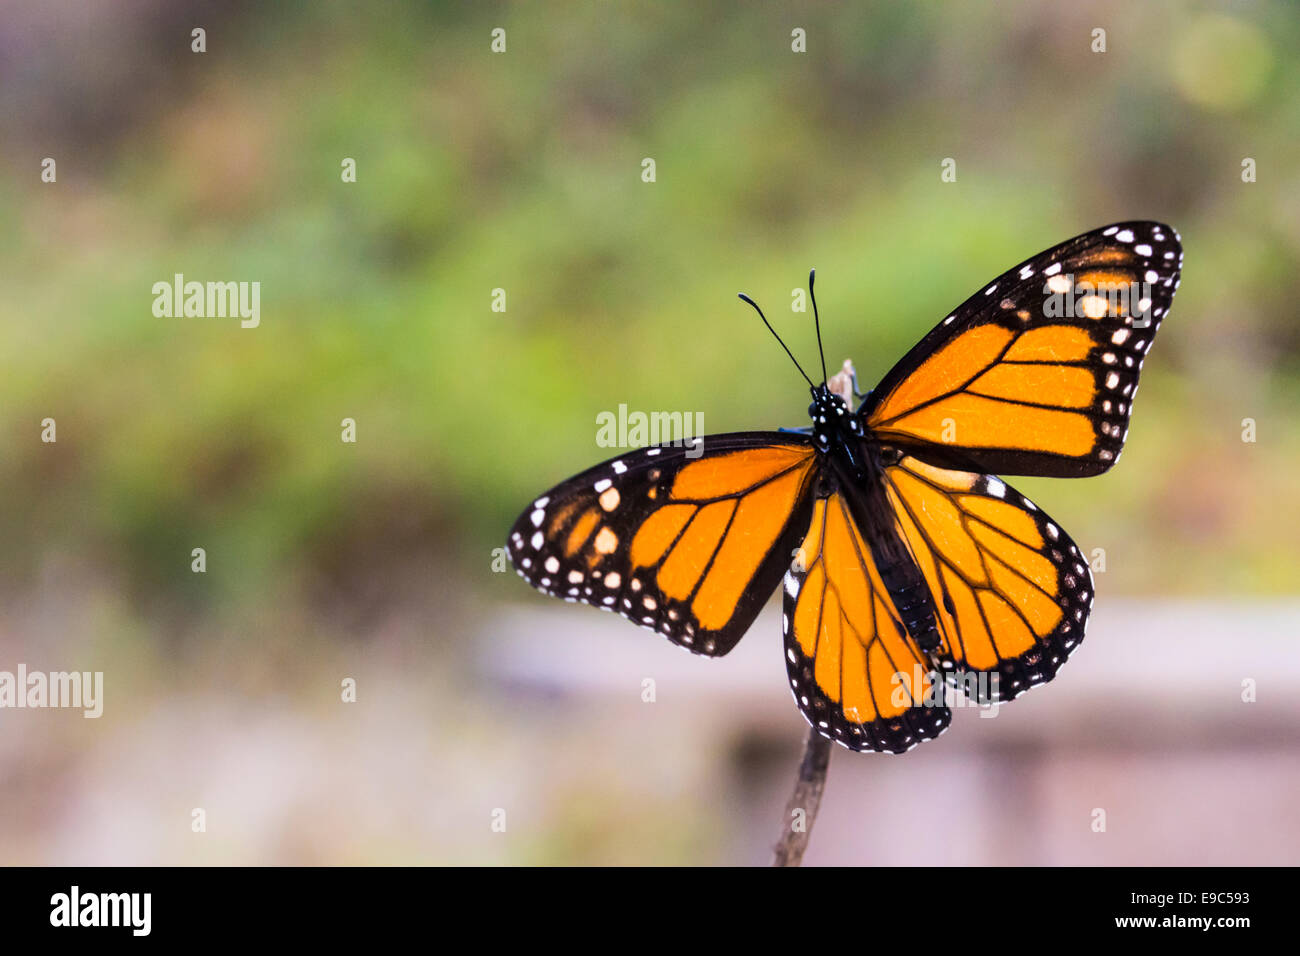 https://c8.alamy.com/comp/E9C593/the-monarch-butterflys-to-natural-bridges-state-park-in-santa-cruz-E9C593.jpg